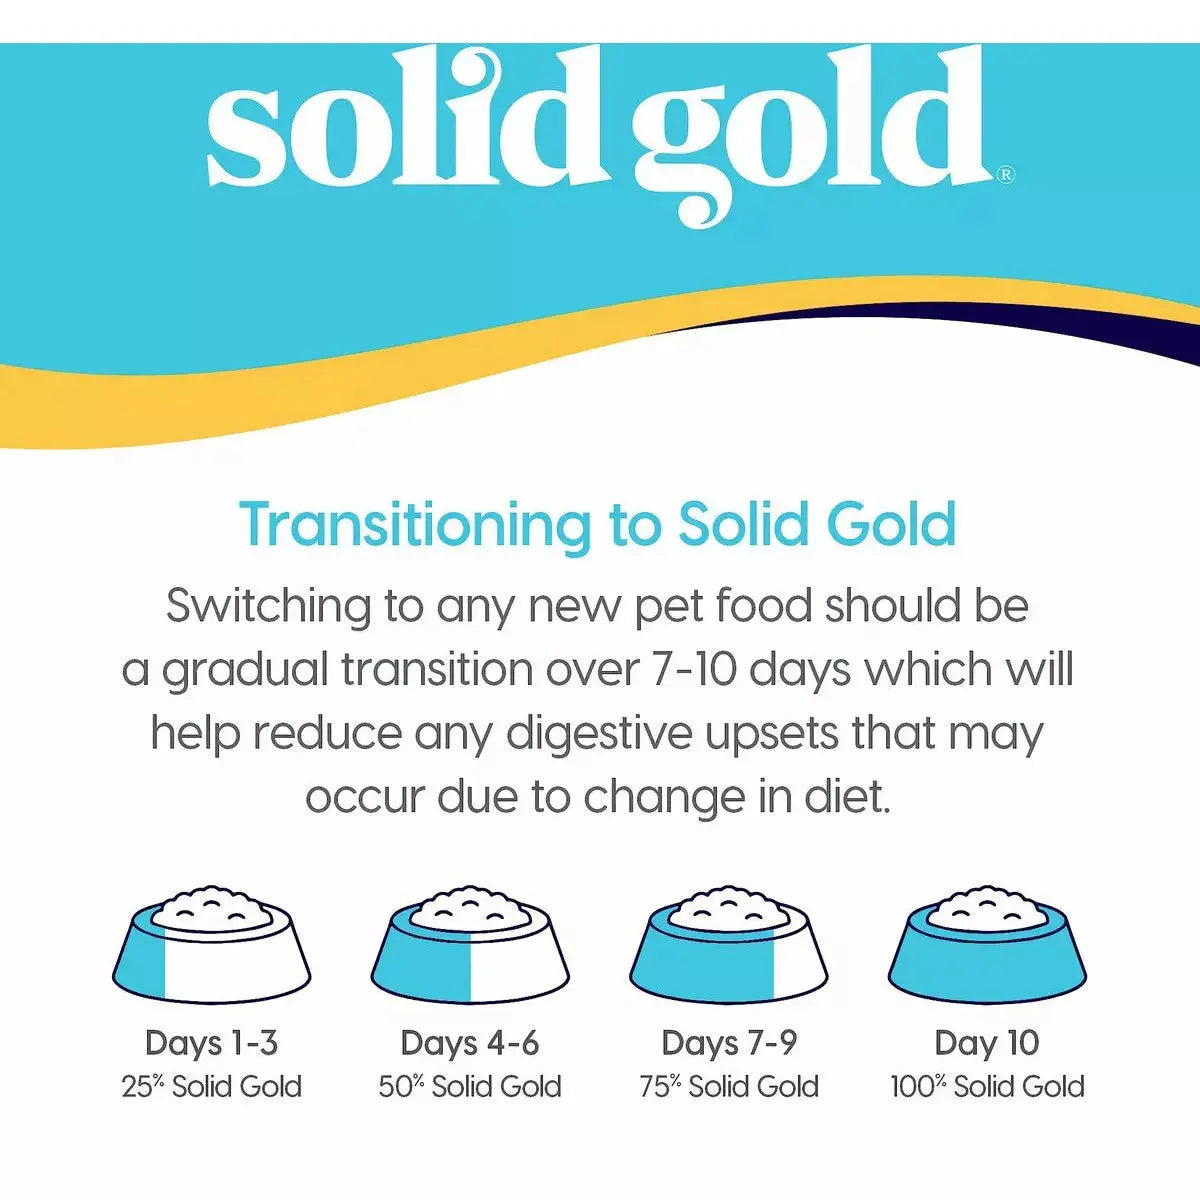 Solid Gold® Sunday Sunrise Grain Free Lamb, Sweet Potato & Pea Recipe Dog Food Solid Gold